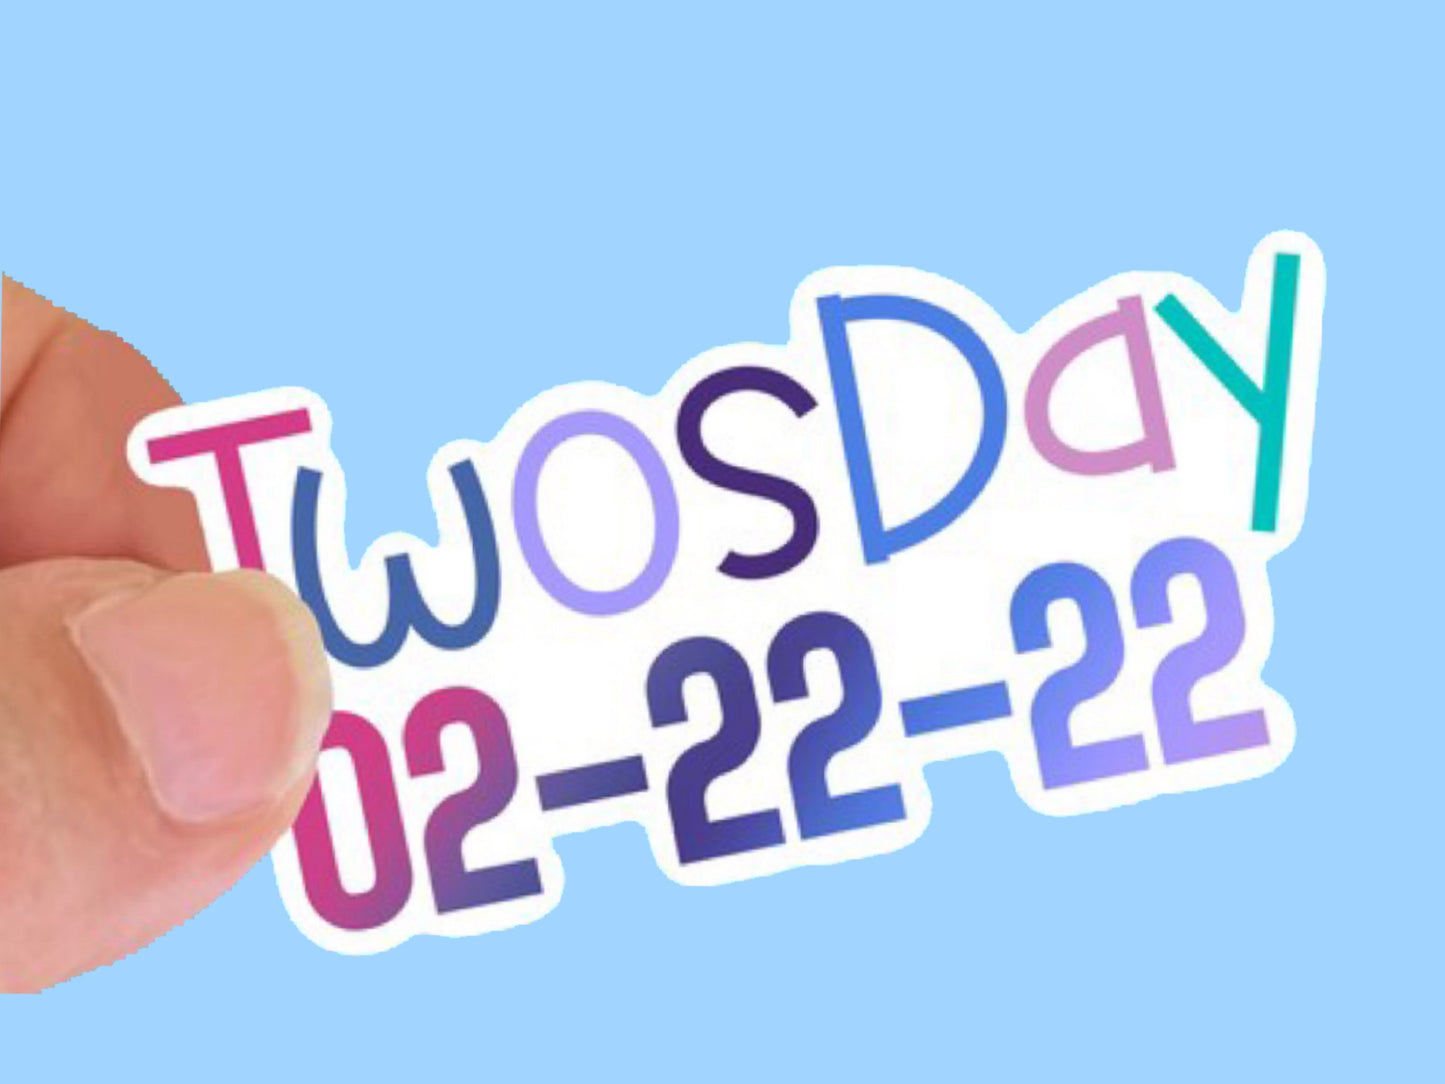 TwosDay Tuesday 02/22/2022 Waterproof Sticker - Laptop Sticker, Water Bottle Sticker & more